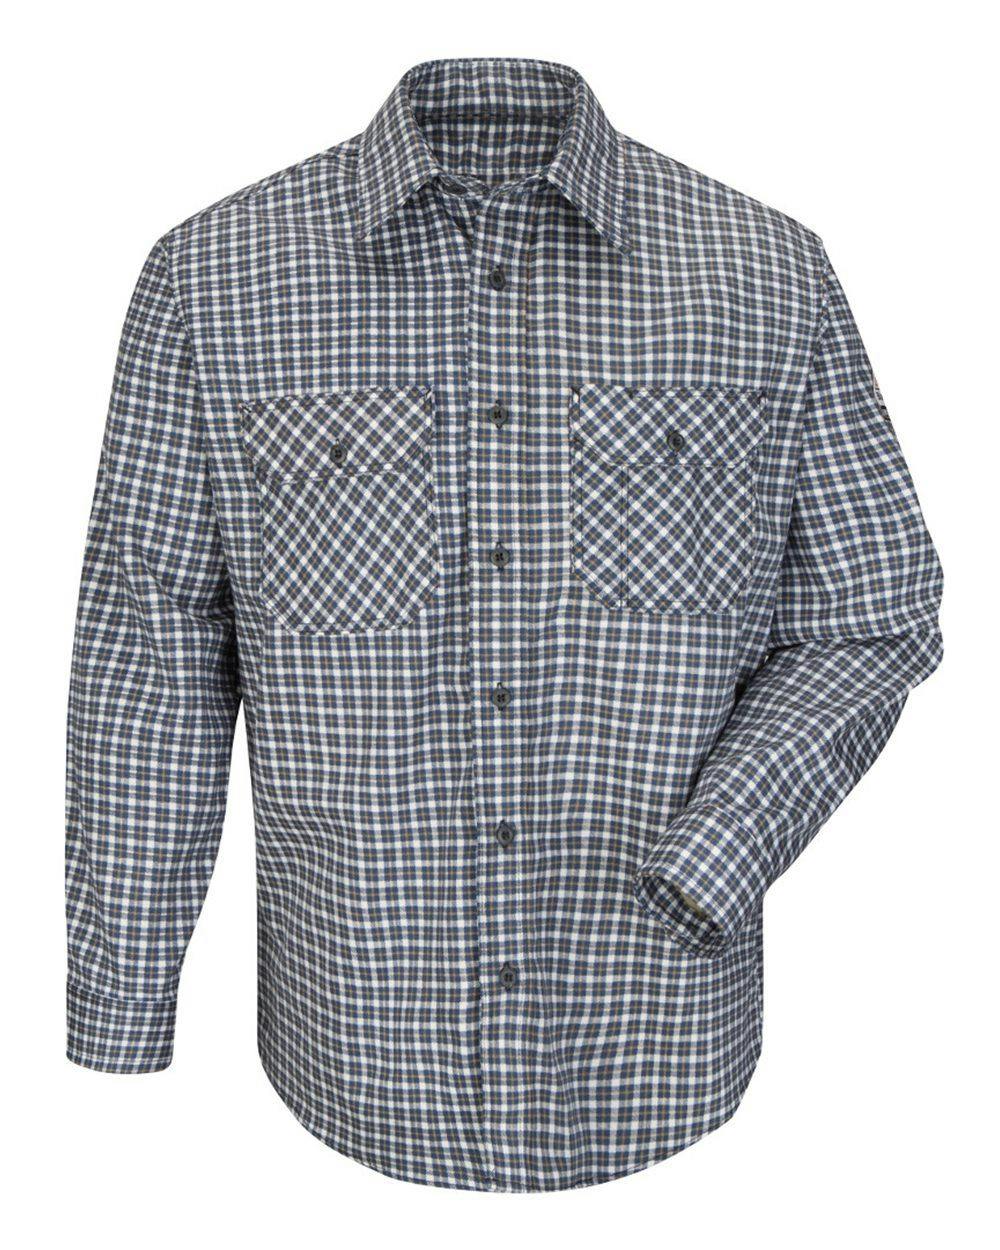 Image for Plaid Long Sleeve Uniform Shirt - SLD6